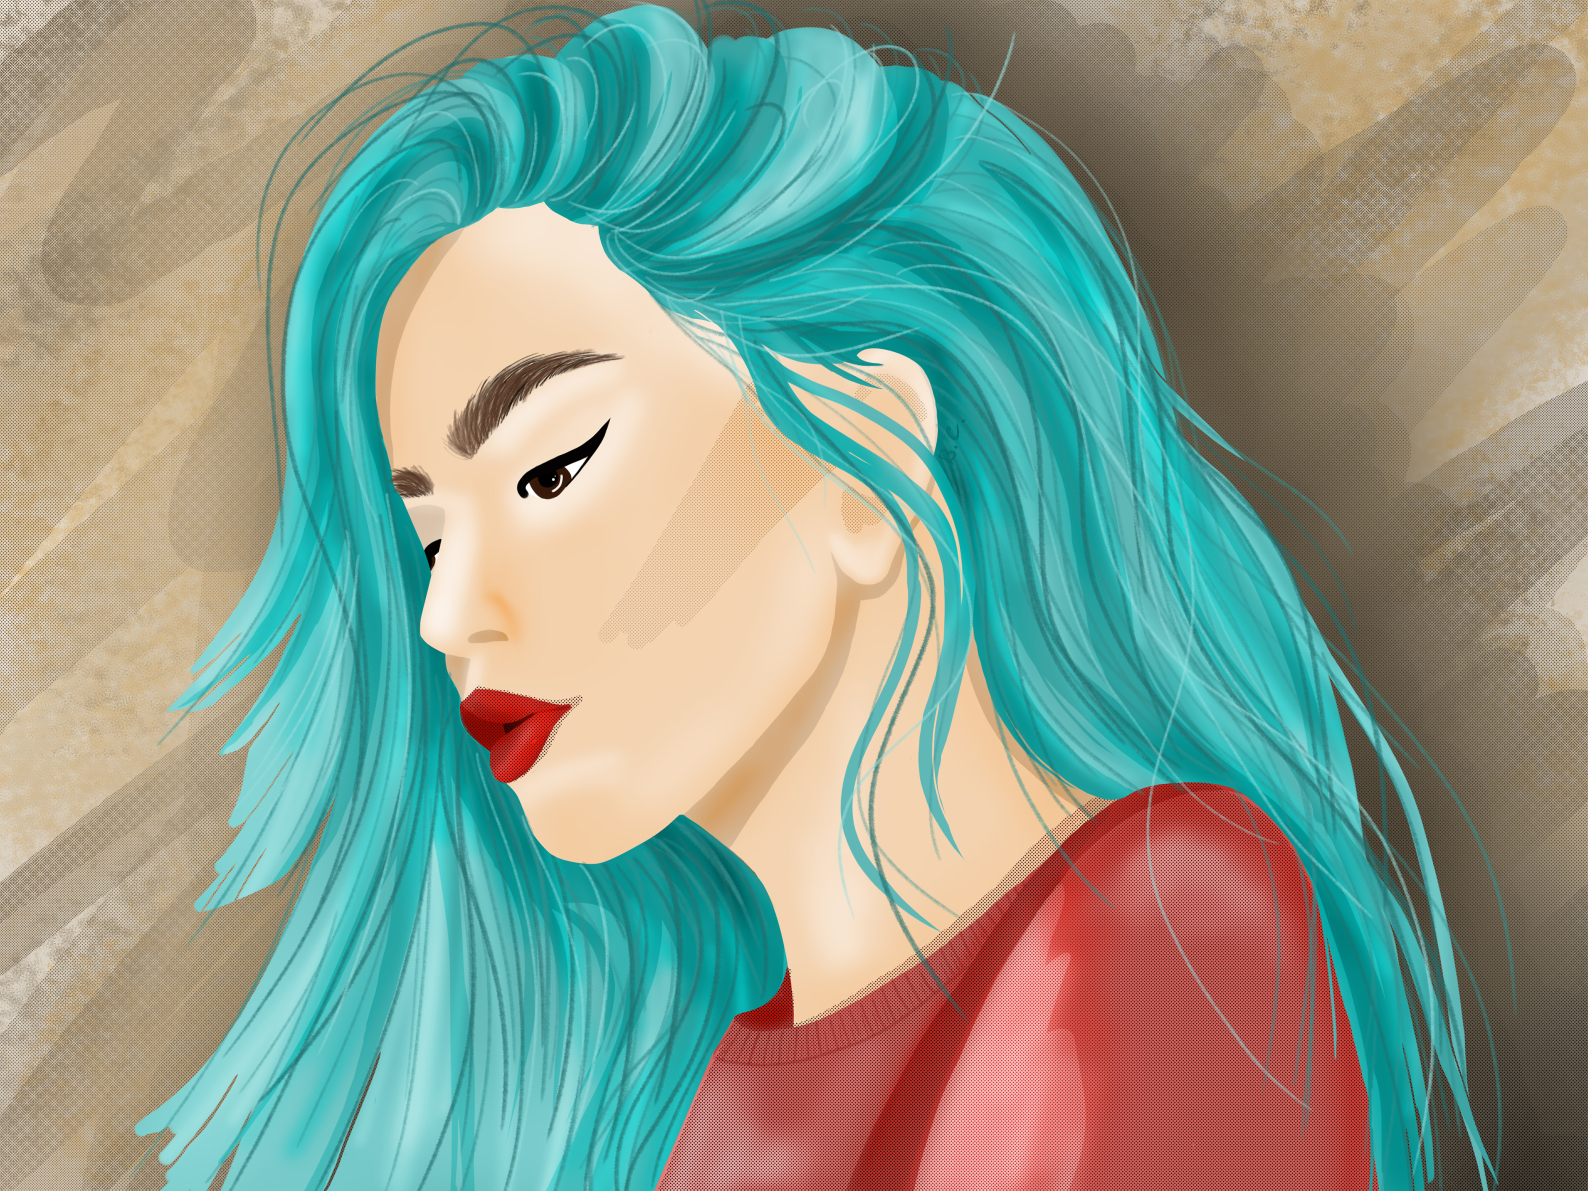 7. Blue Hair Girl Drawing Tumblr - wide 7